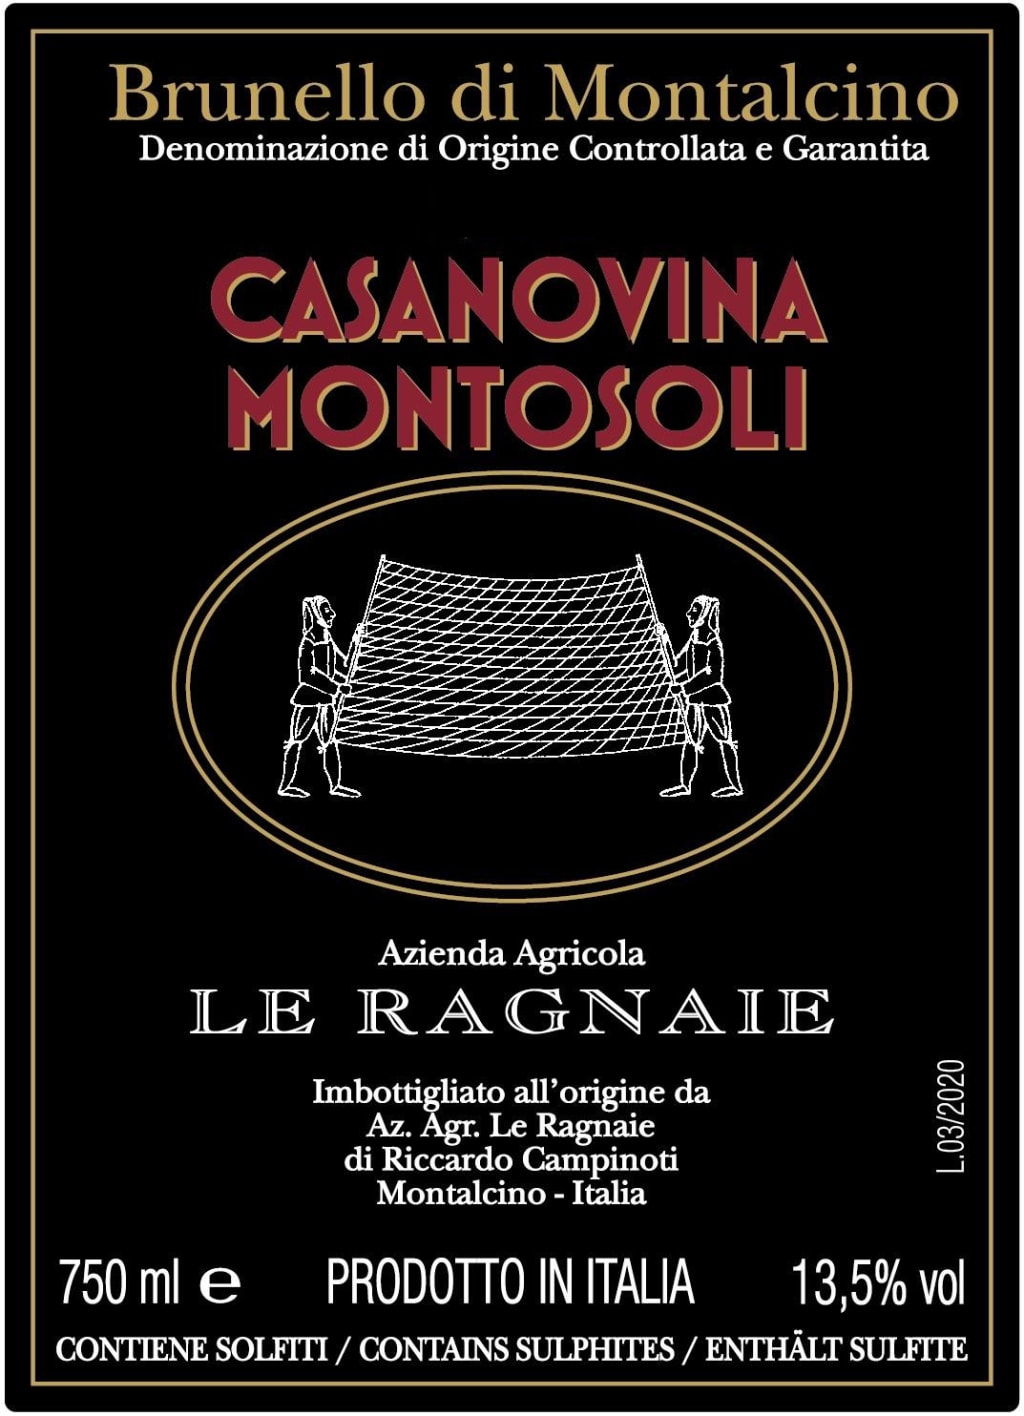 2018 Le Ragnaie Casanovina Montosoli Brunello